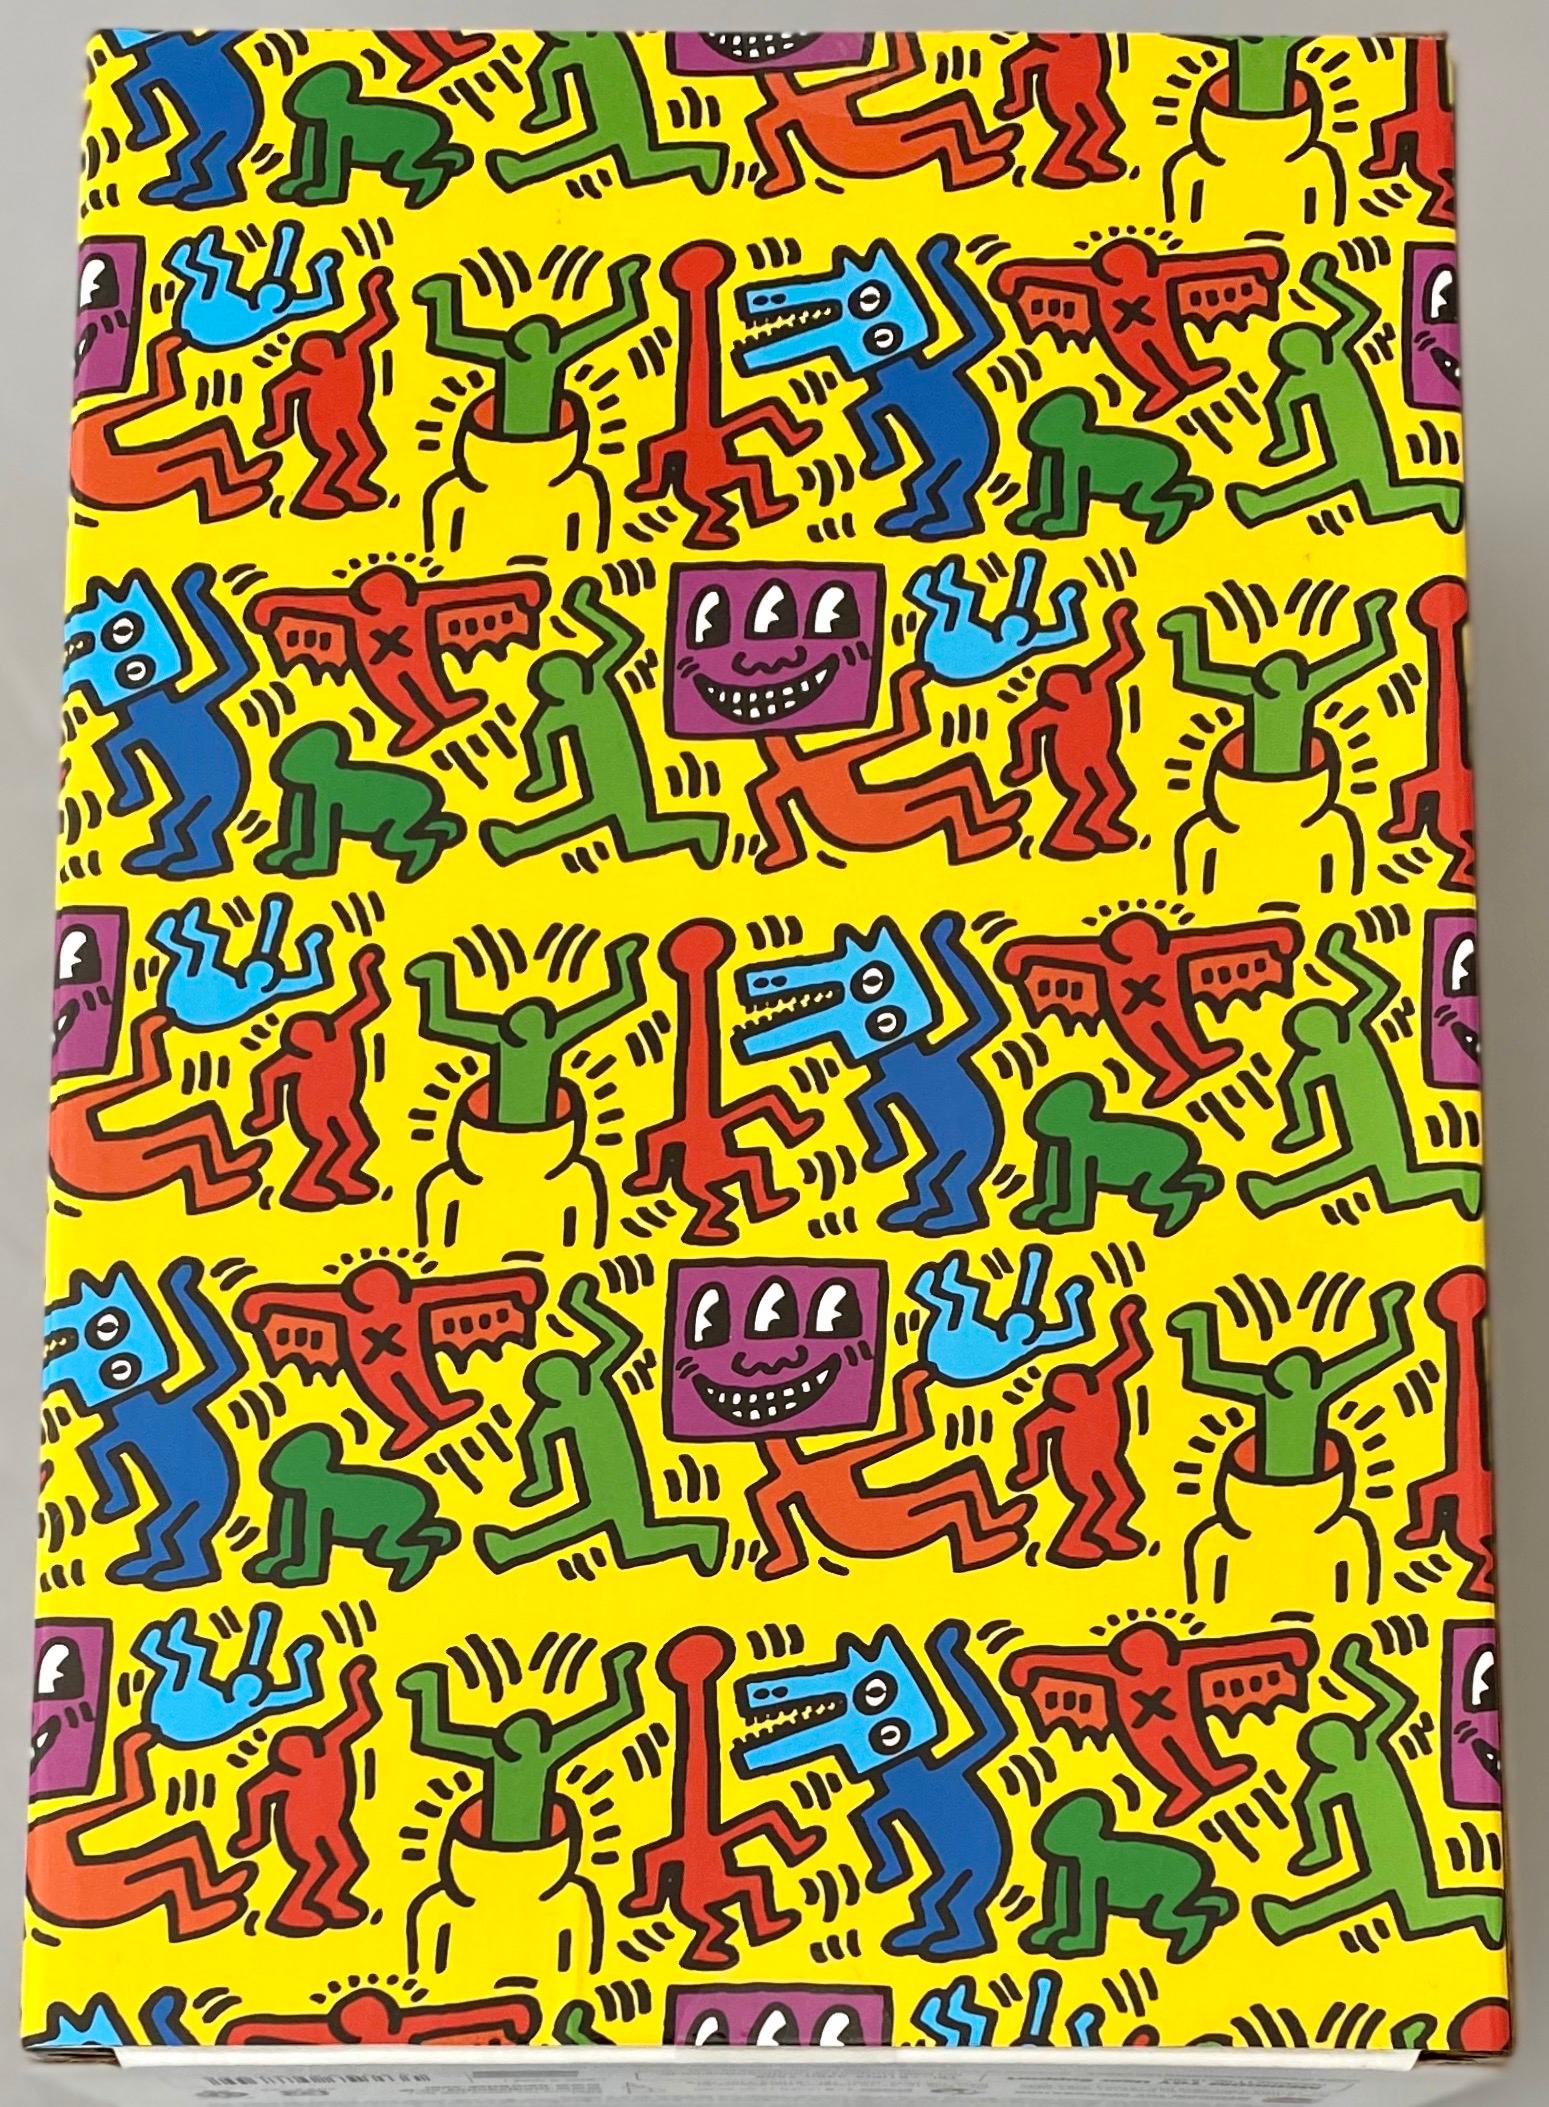 Keith Haring Bearbrick 400% Companion (Haring BE@RBRICK) 1